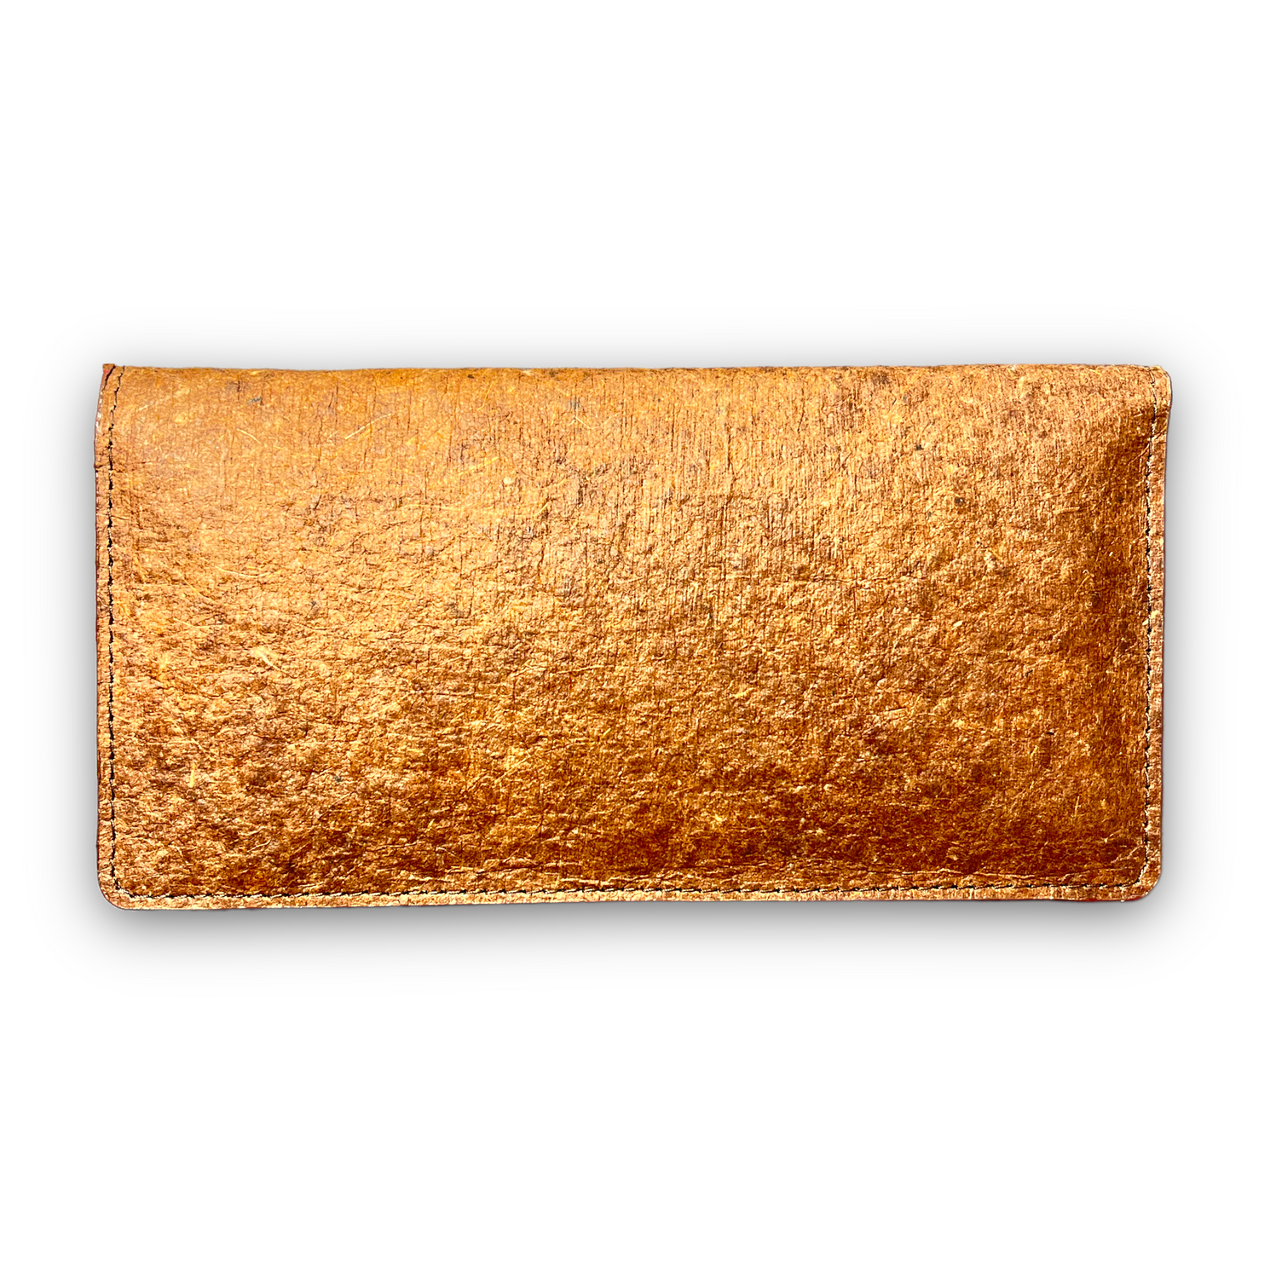 Coconut Leather Slim Wallet for Women - Cutch Brown